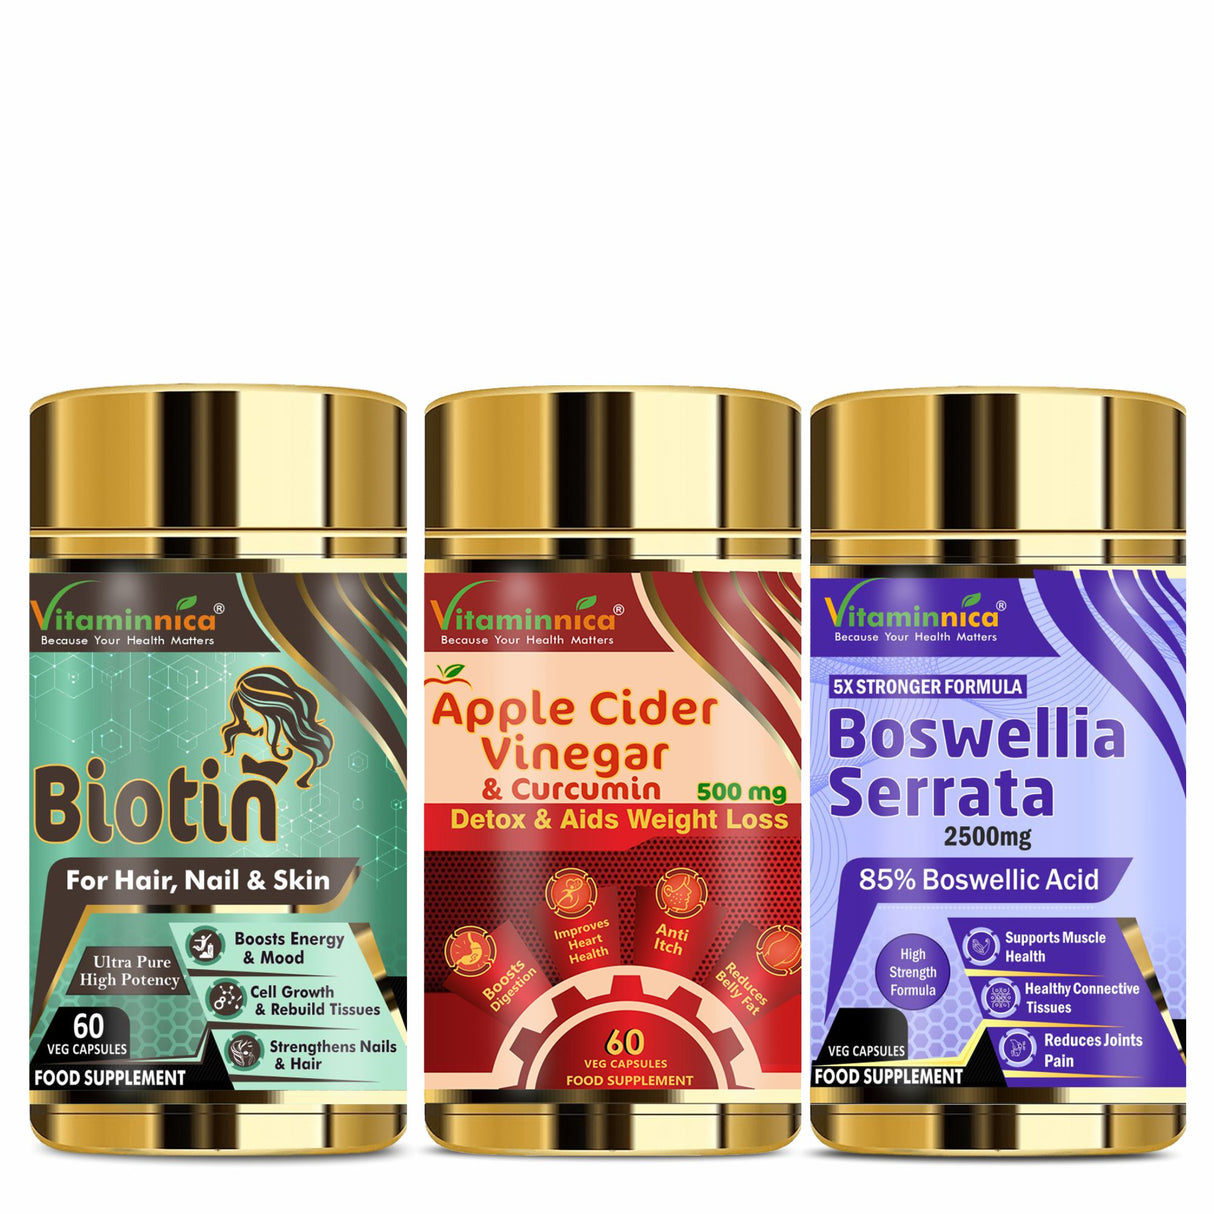 Vitaminnica Biotin+ Apple Cider Vinegar & Curcumin+ Boswellia Serrata- Combo Pack| 180 Capsules